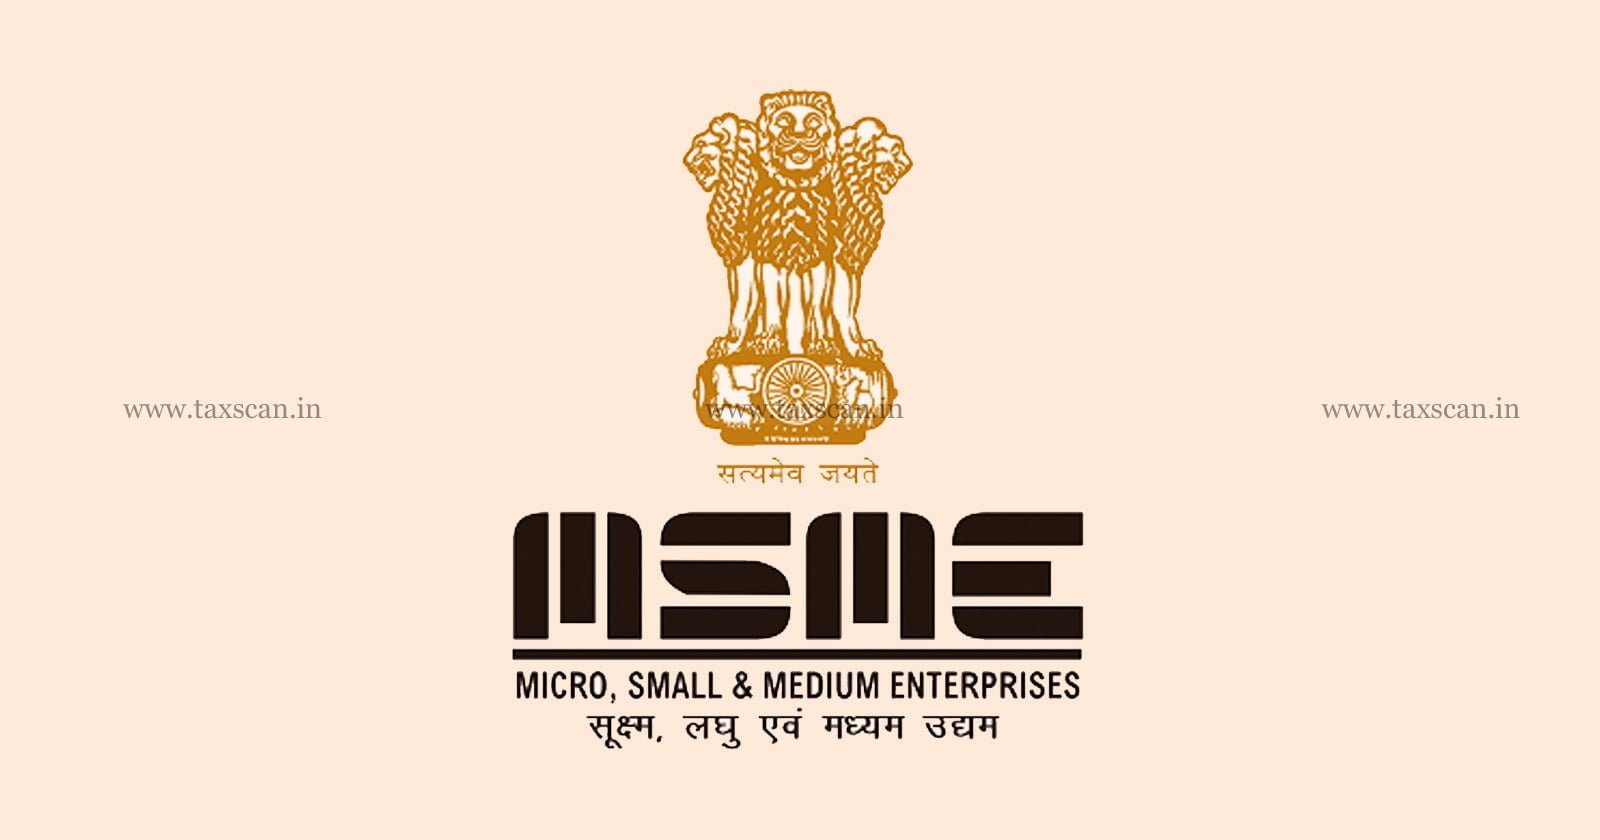 GST - MSME - Coimbatore and Tirupur MSME - Tirupur MSME - electricity tariffs - taxscan